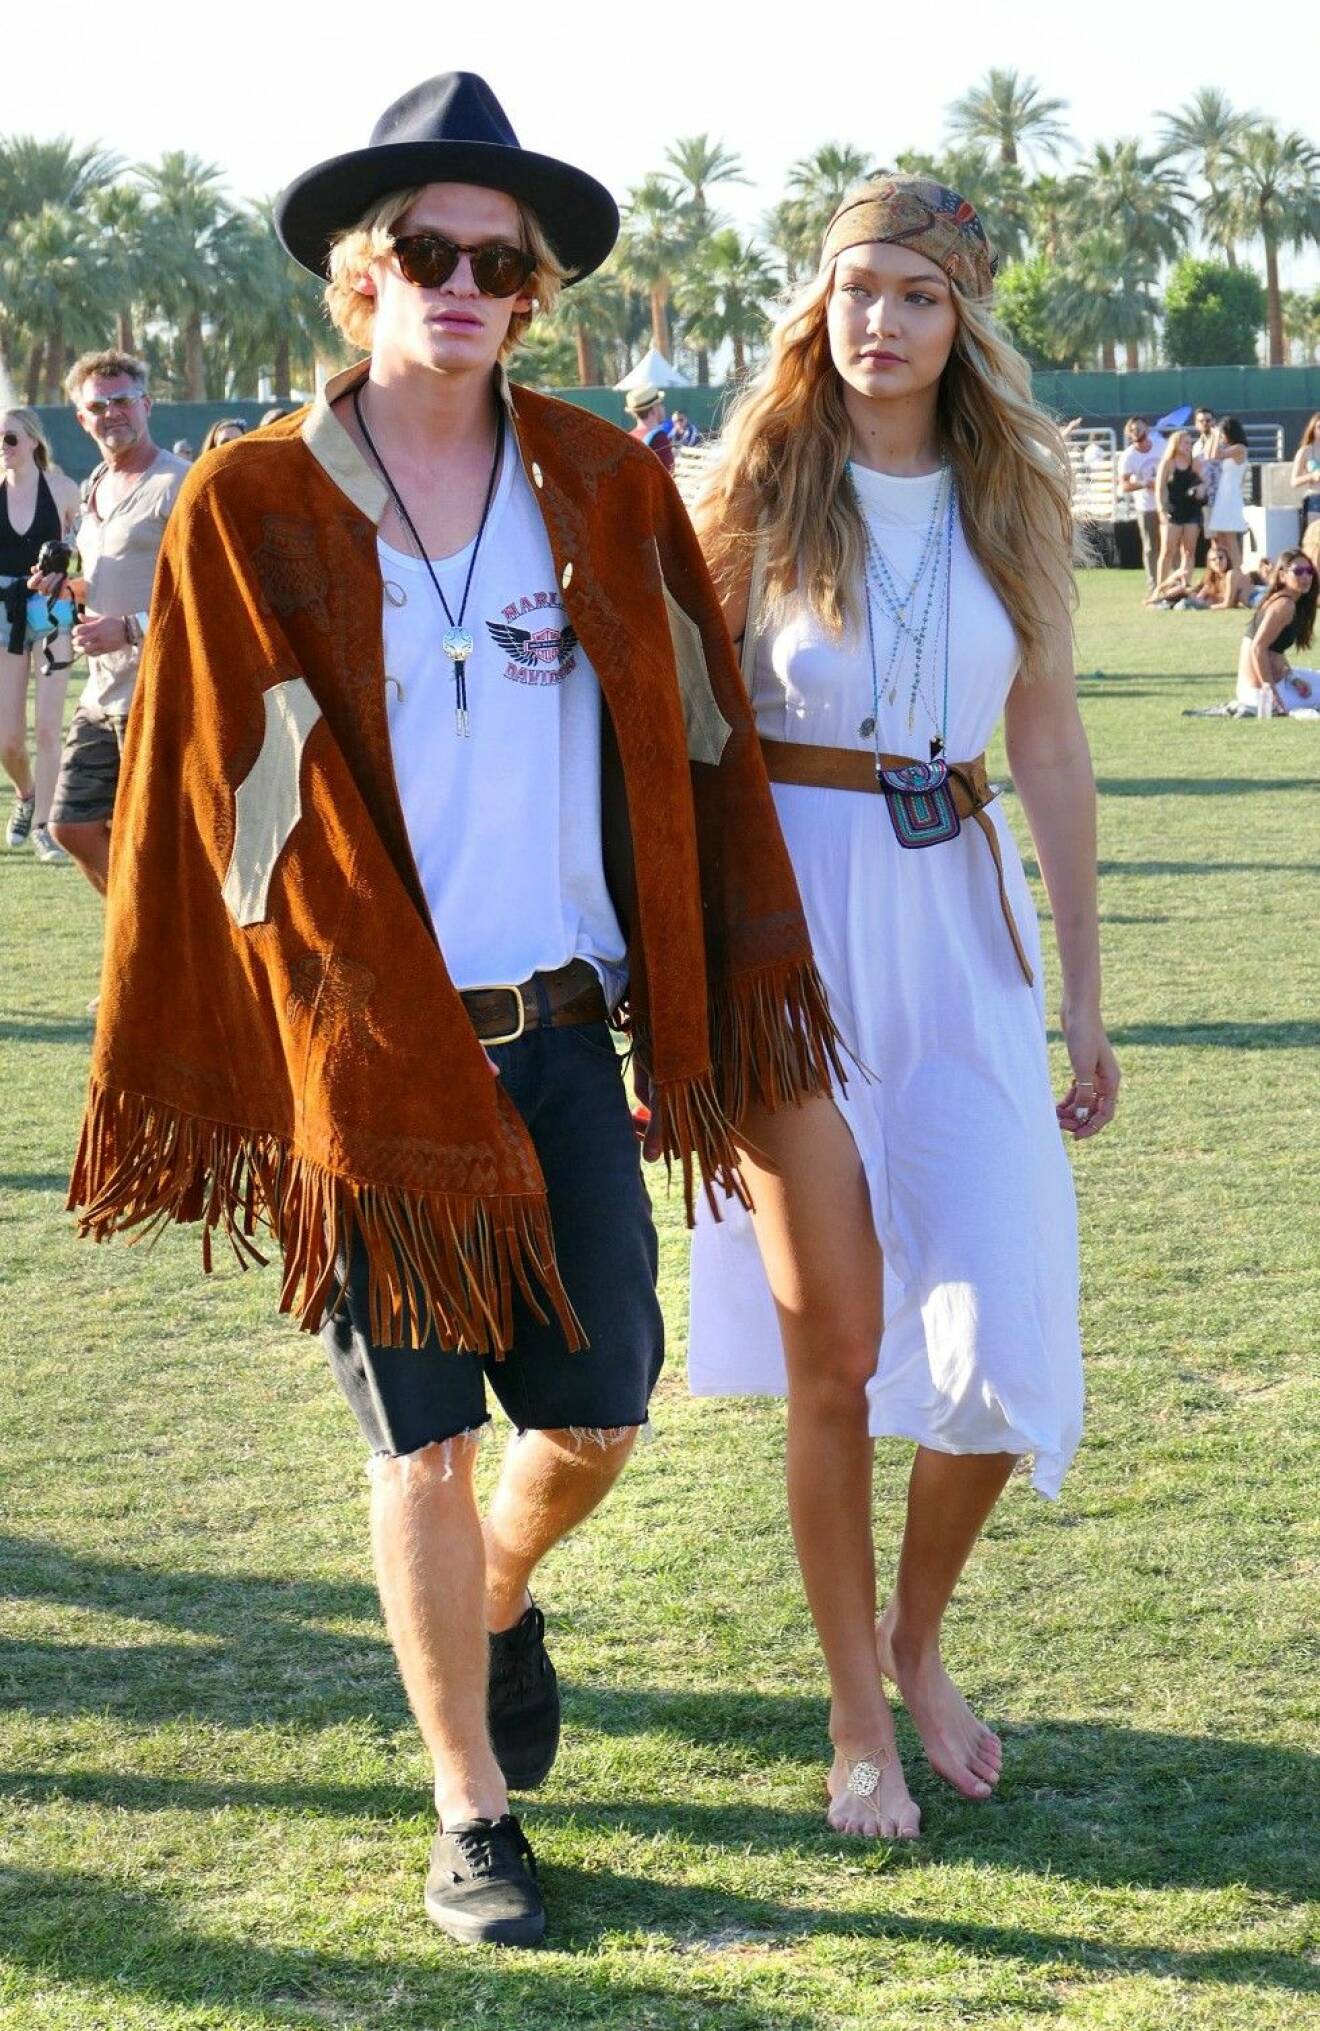 Gigi Hadid walks arm-in-arm with Cody Simpson at Coachella in Indio, CA